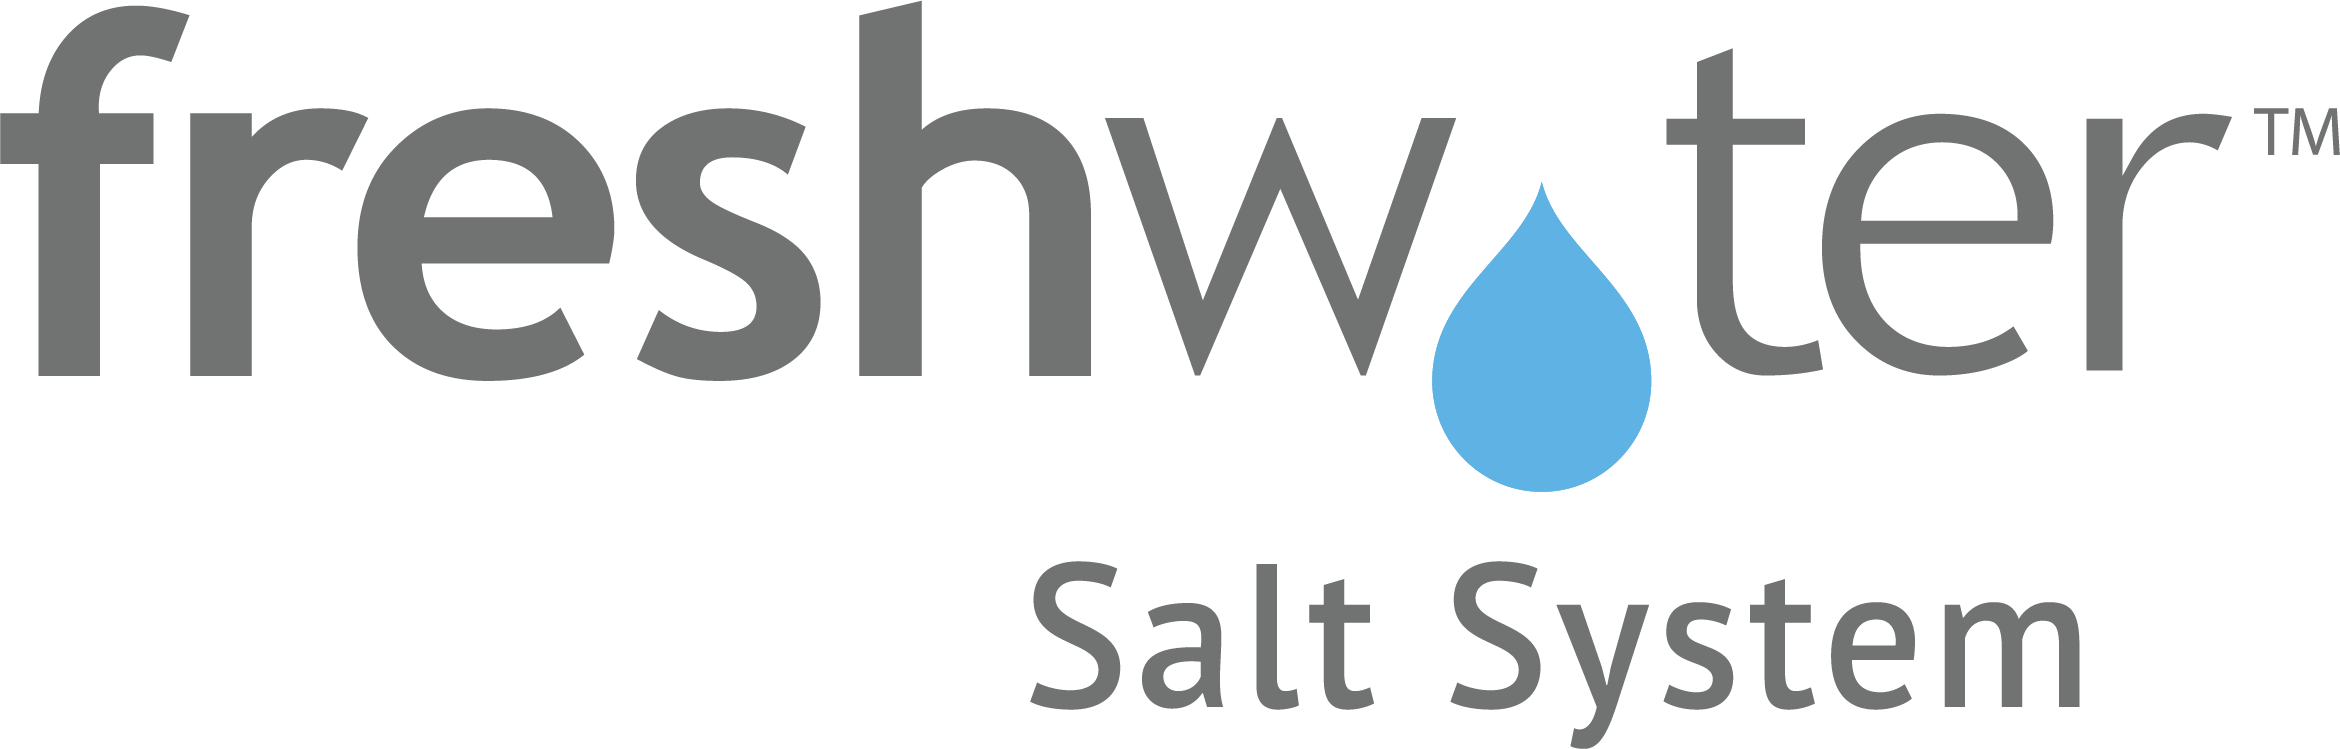 Caldera-Freshwater-Salt-Sytem-Logo-1122